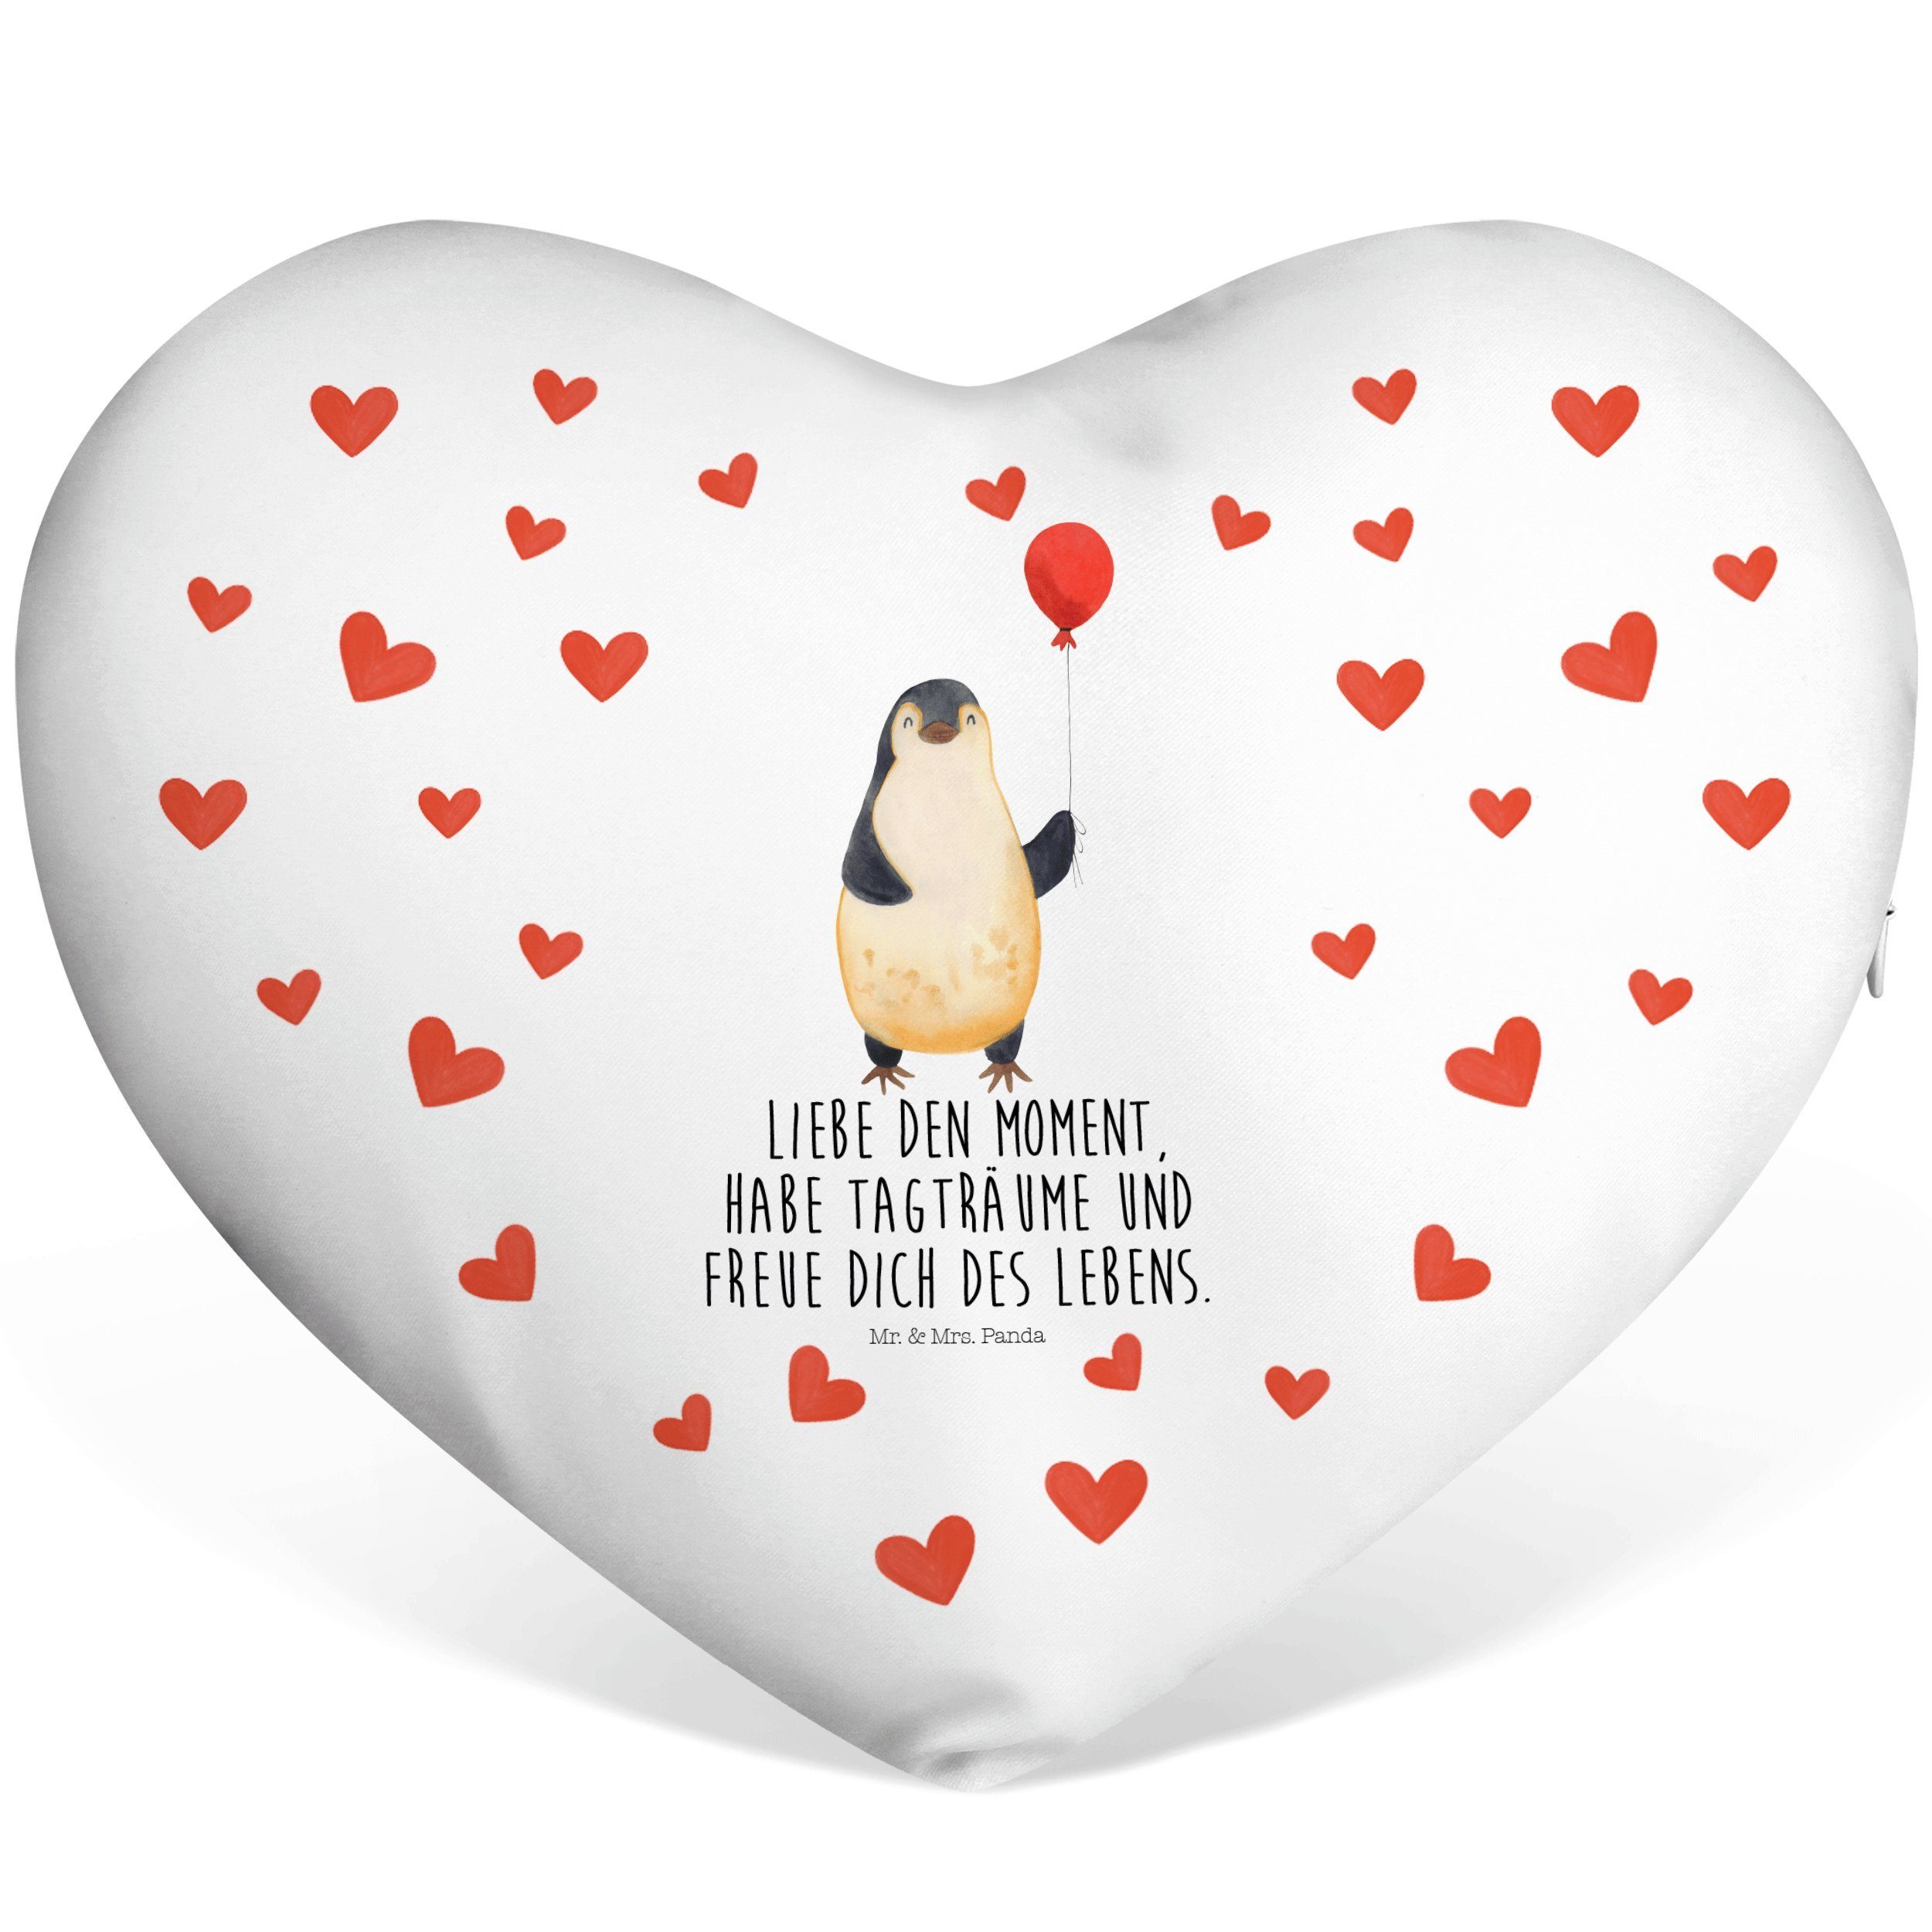 Mr. & Mrs. Panda Dekokissen Pinguin Luftballon - Weiß - Geschenk, Herzform, gute Laune, Liebe, De